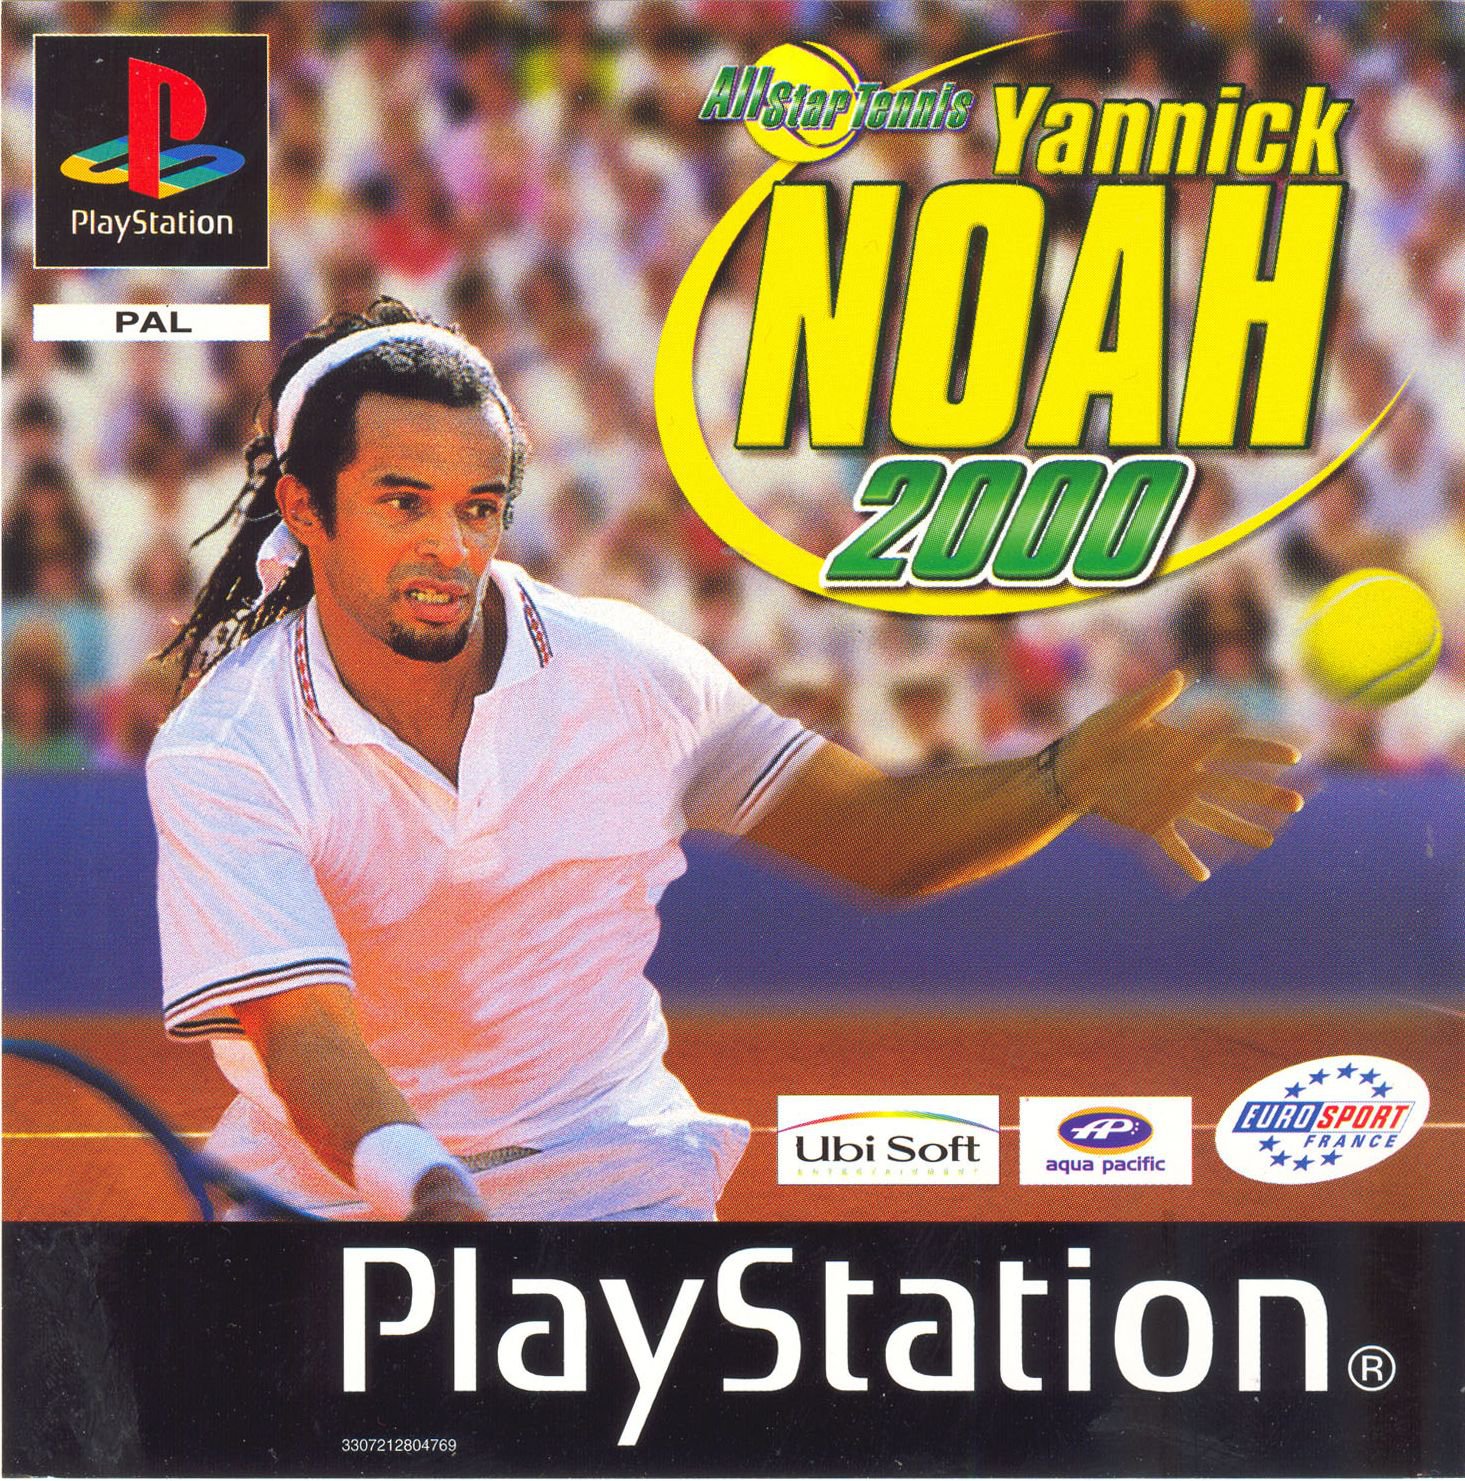 Caratula de Yannick Noah All Star Tennis 2000 para PlayStation